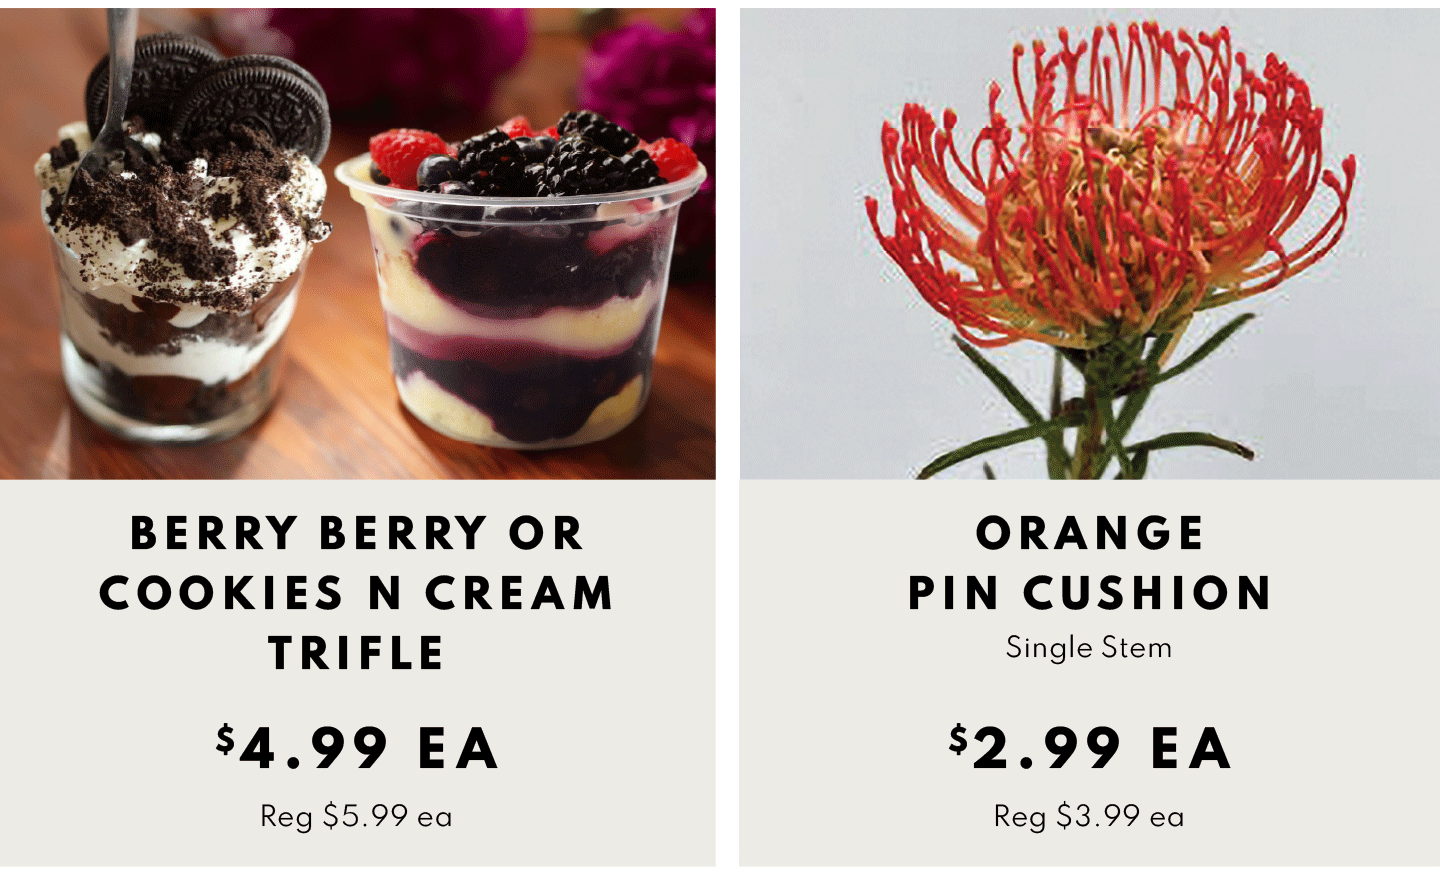 Berry Berry or Cookies N Cream Trifle $4.99 ea and Orange Pin Cushion $2.99 ea